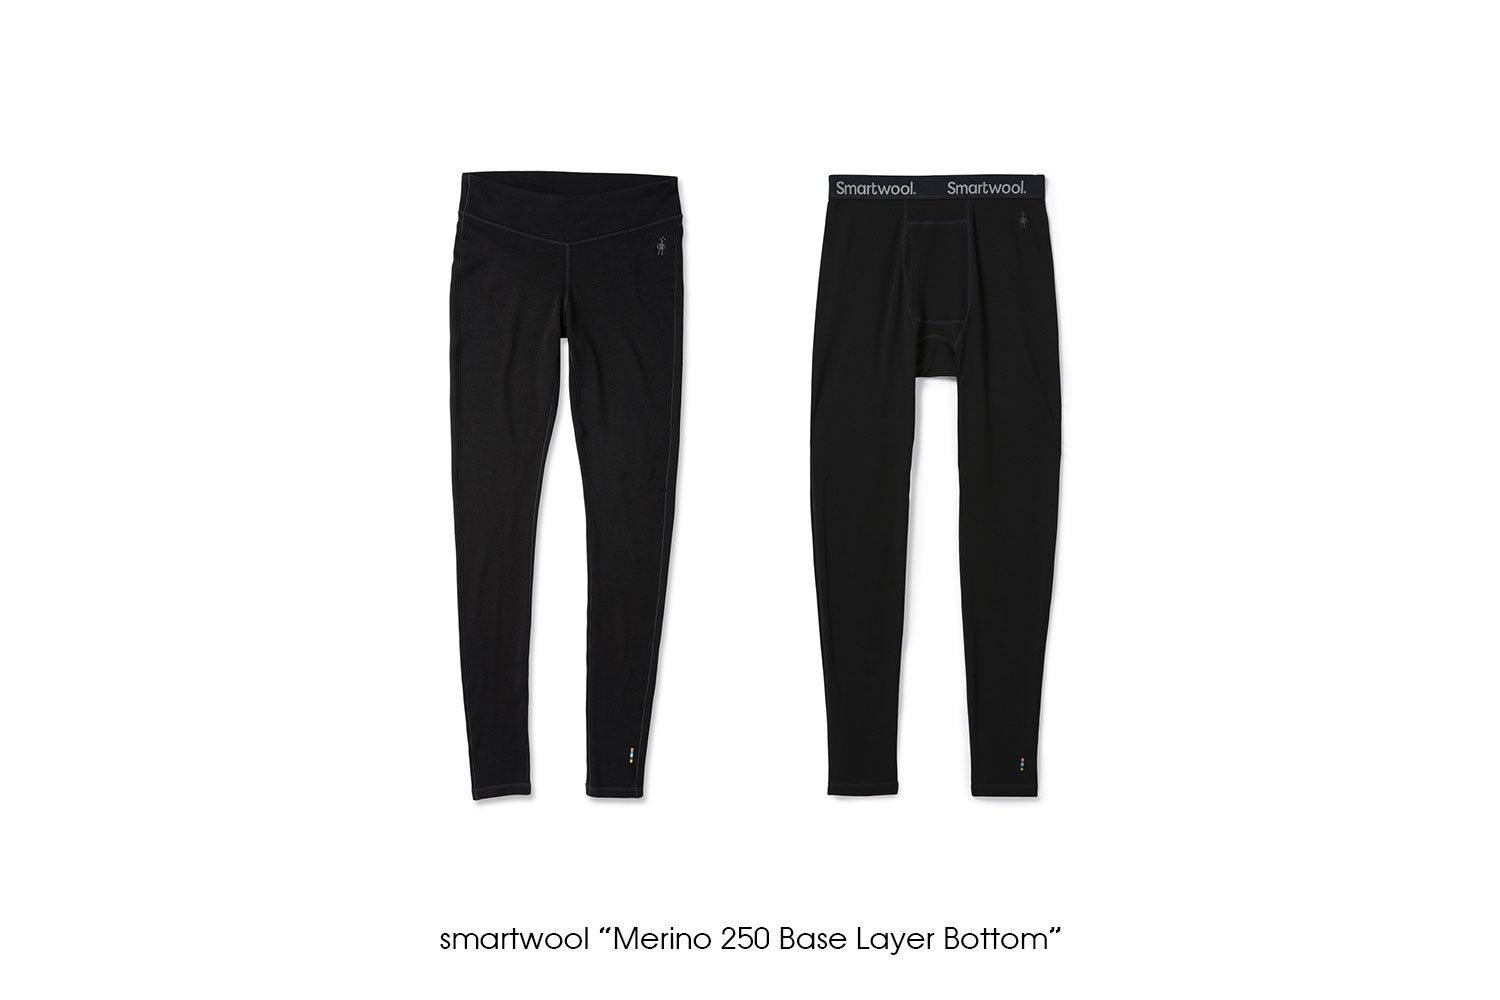 smartwool "Merino 250 Base Layer Bottom"